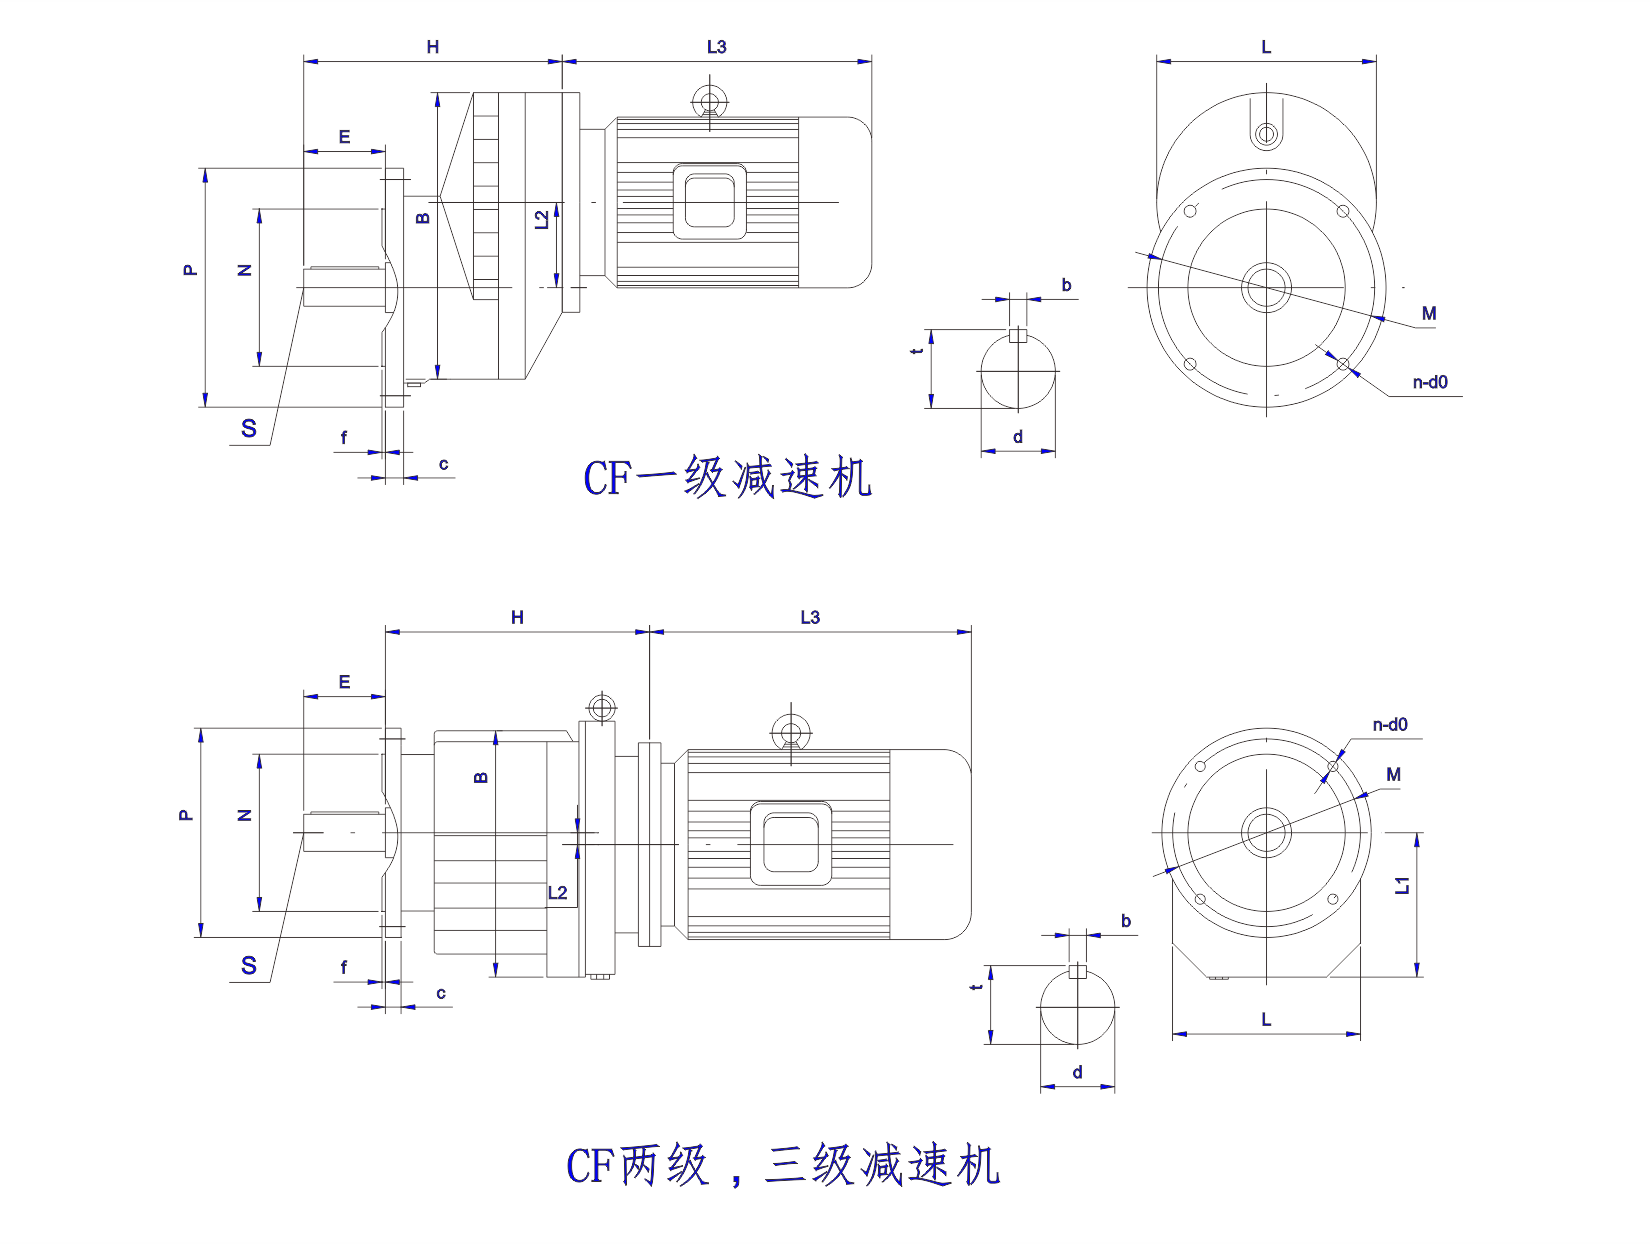   CF 系列同軸齒輪減速機設計圖